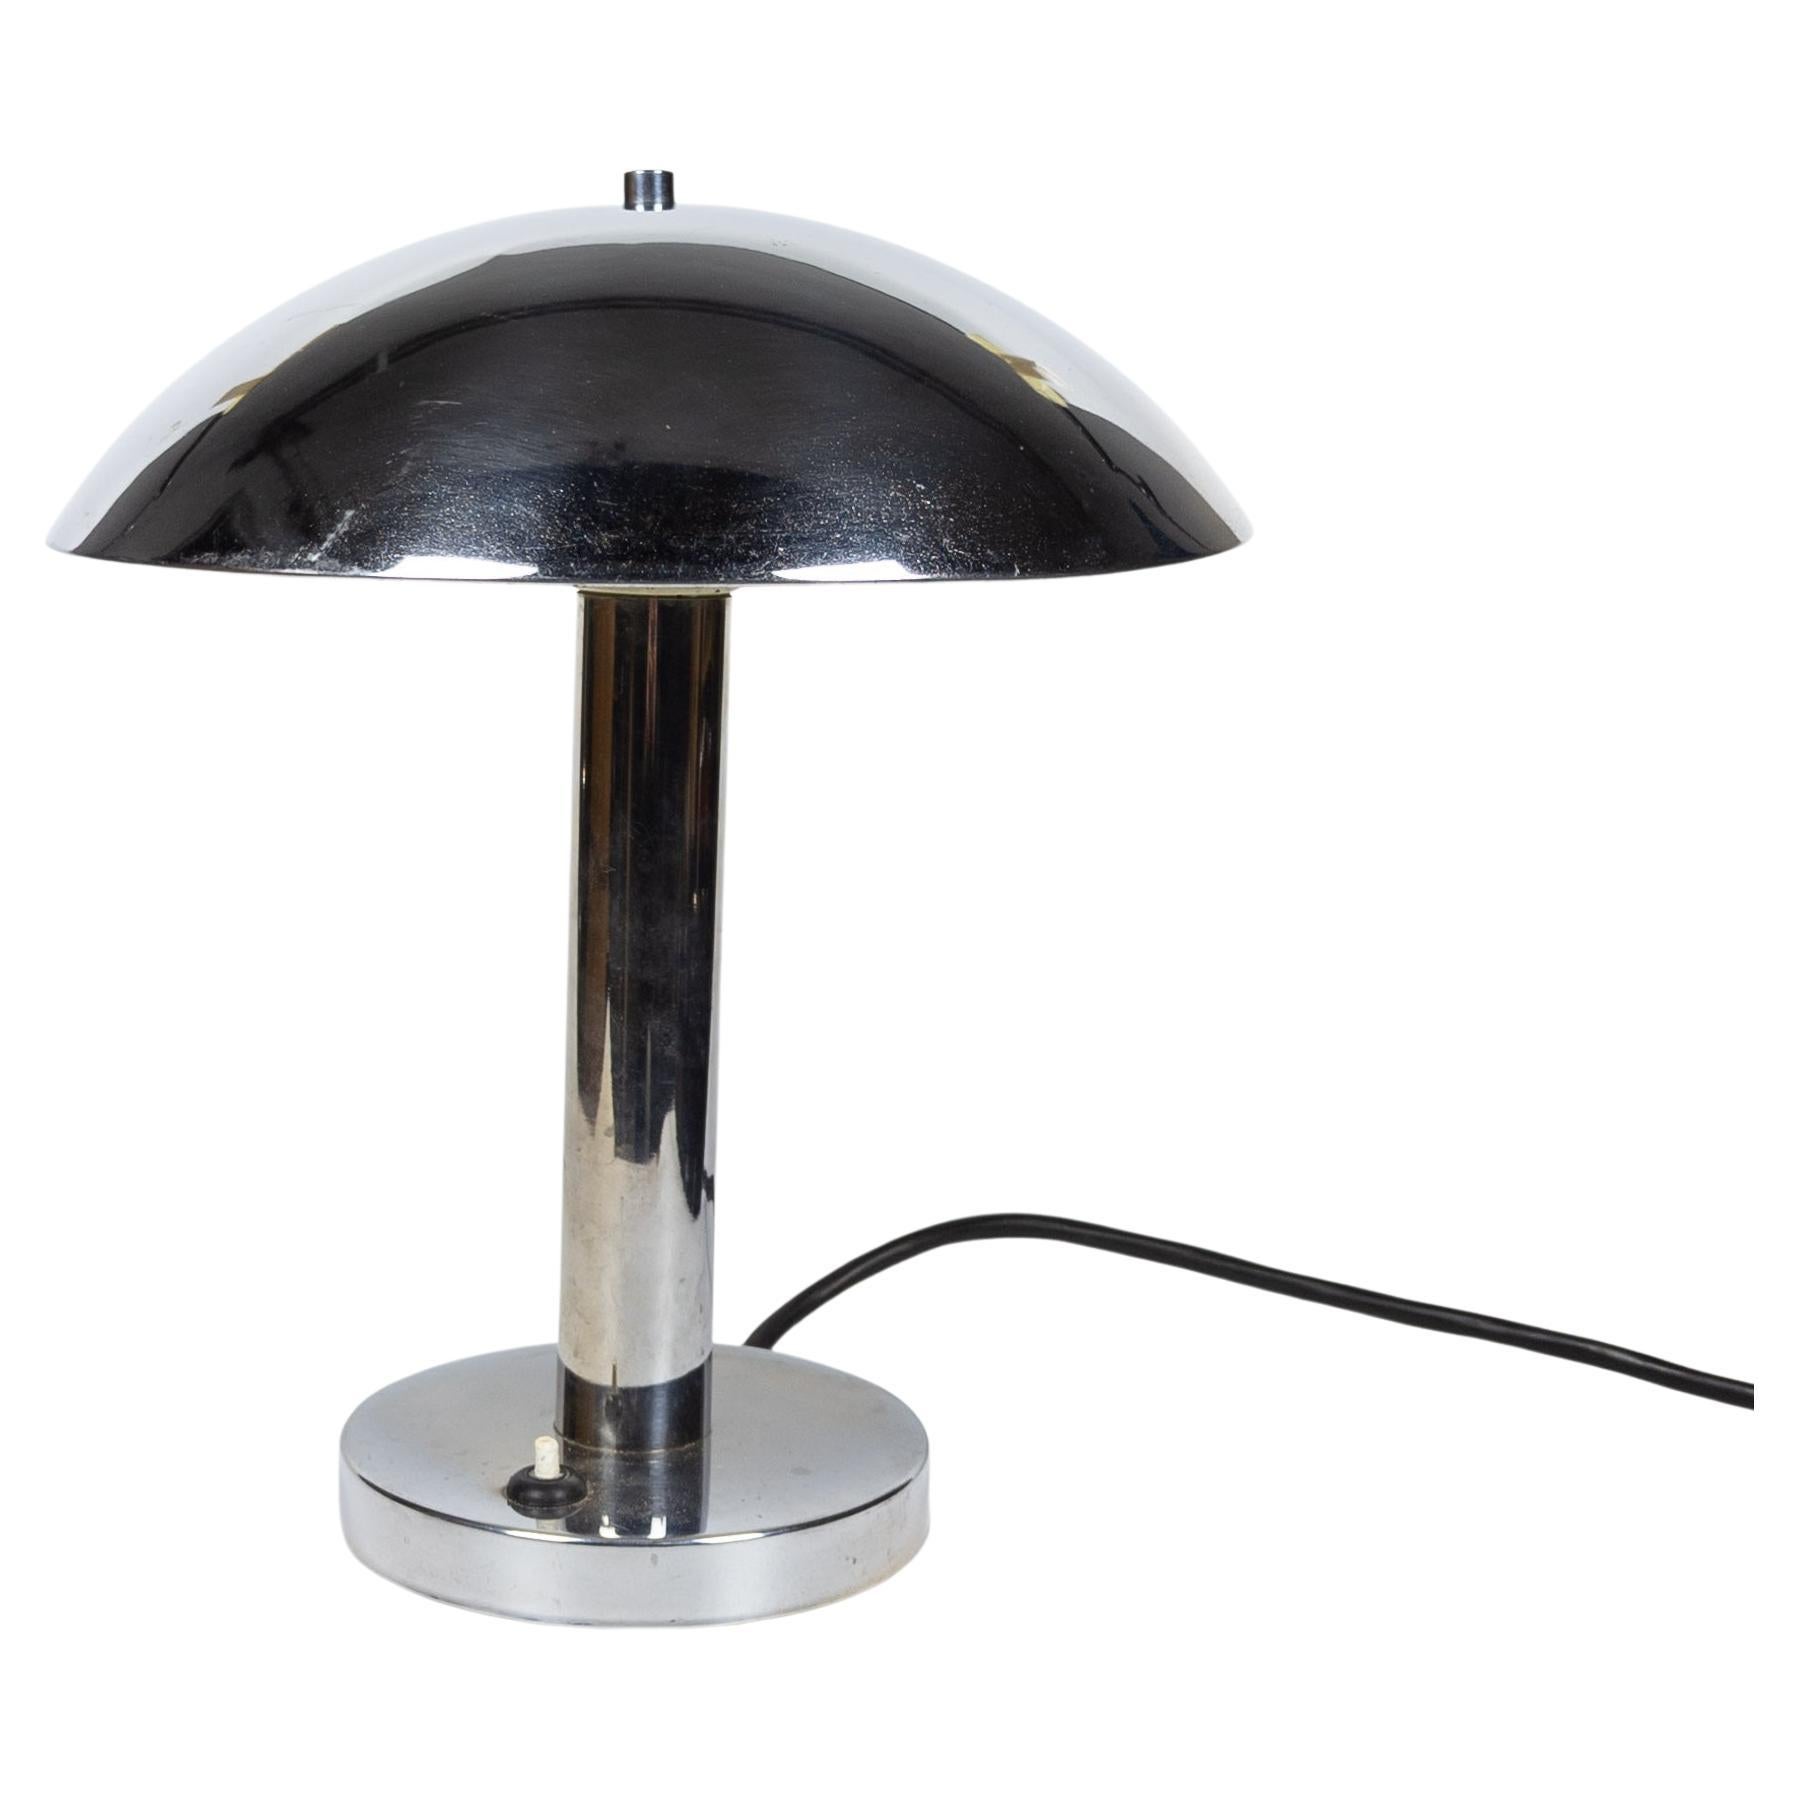 Bauhaus chrome lamp by Miroslav Prokop for Napako